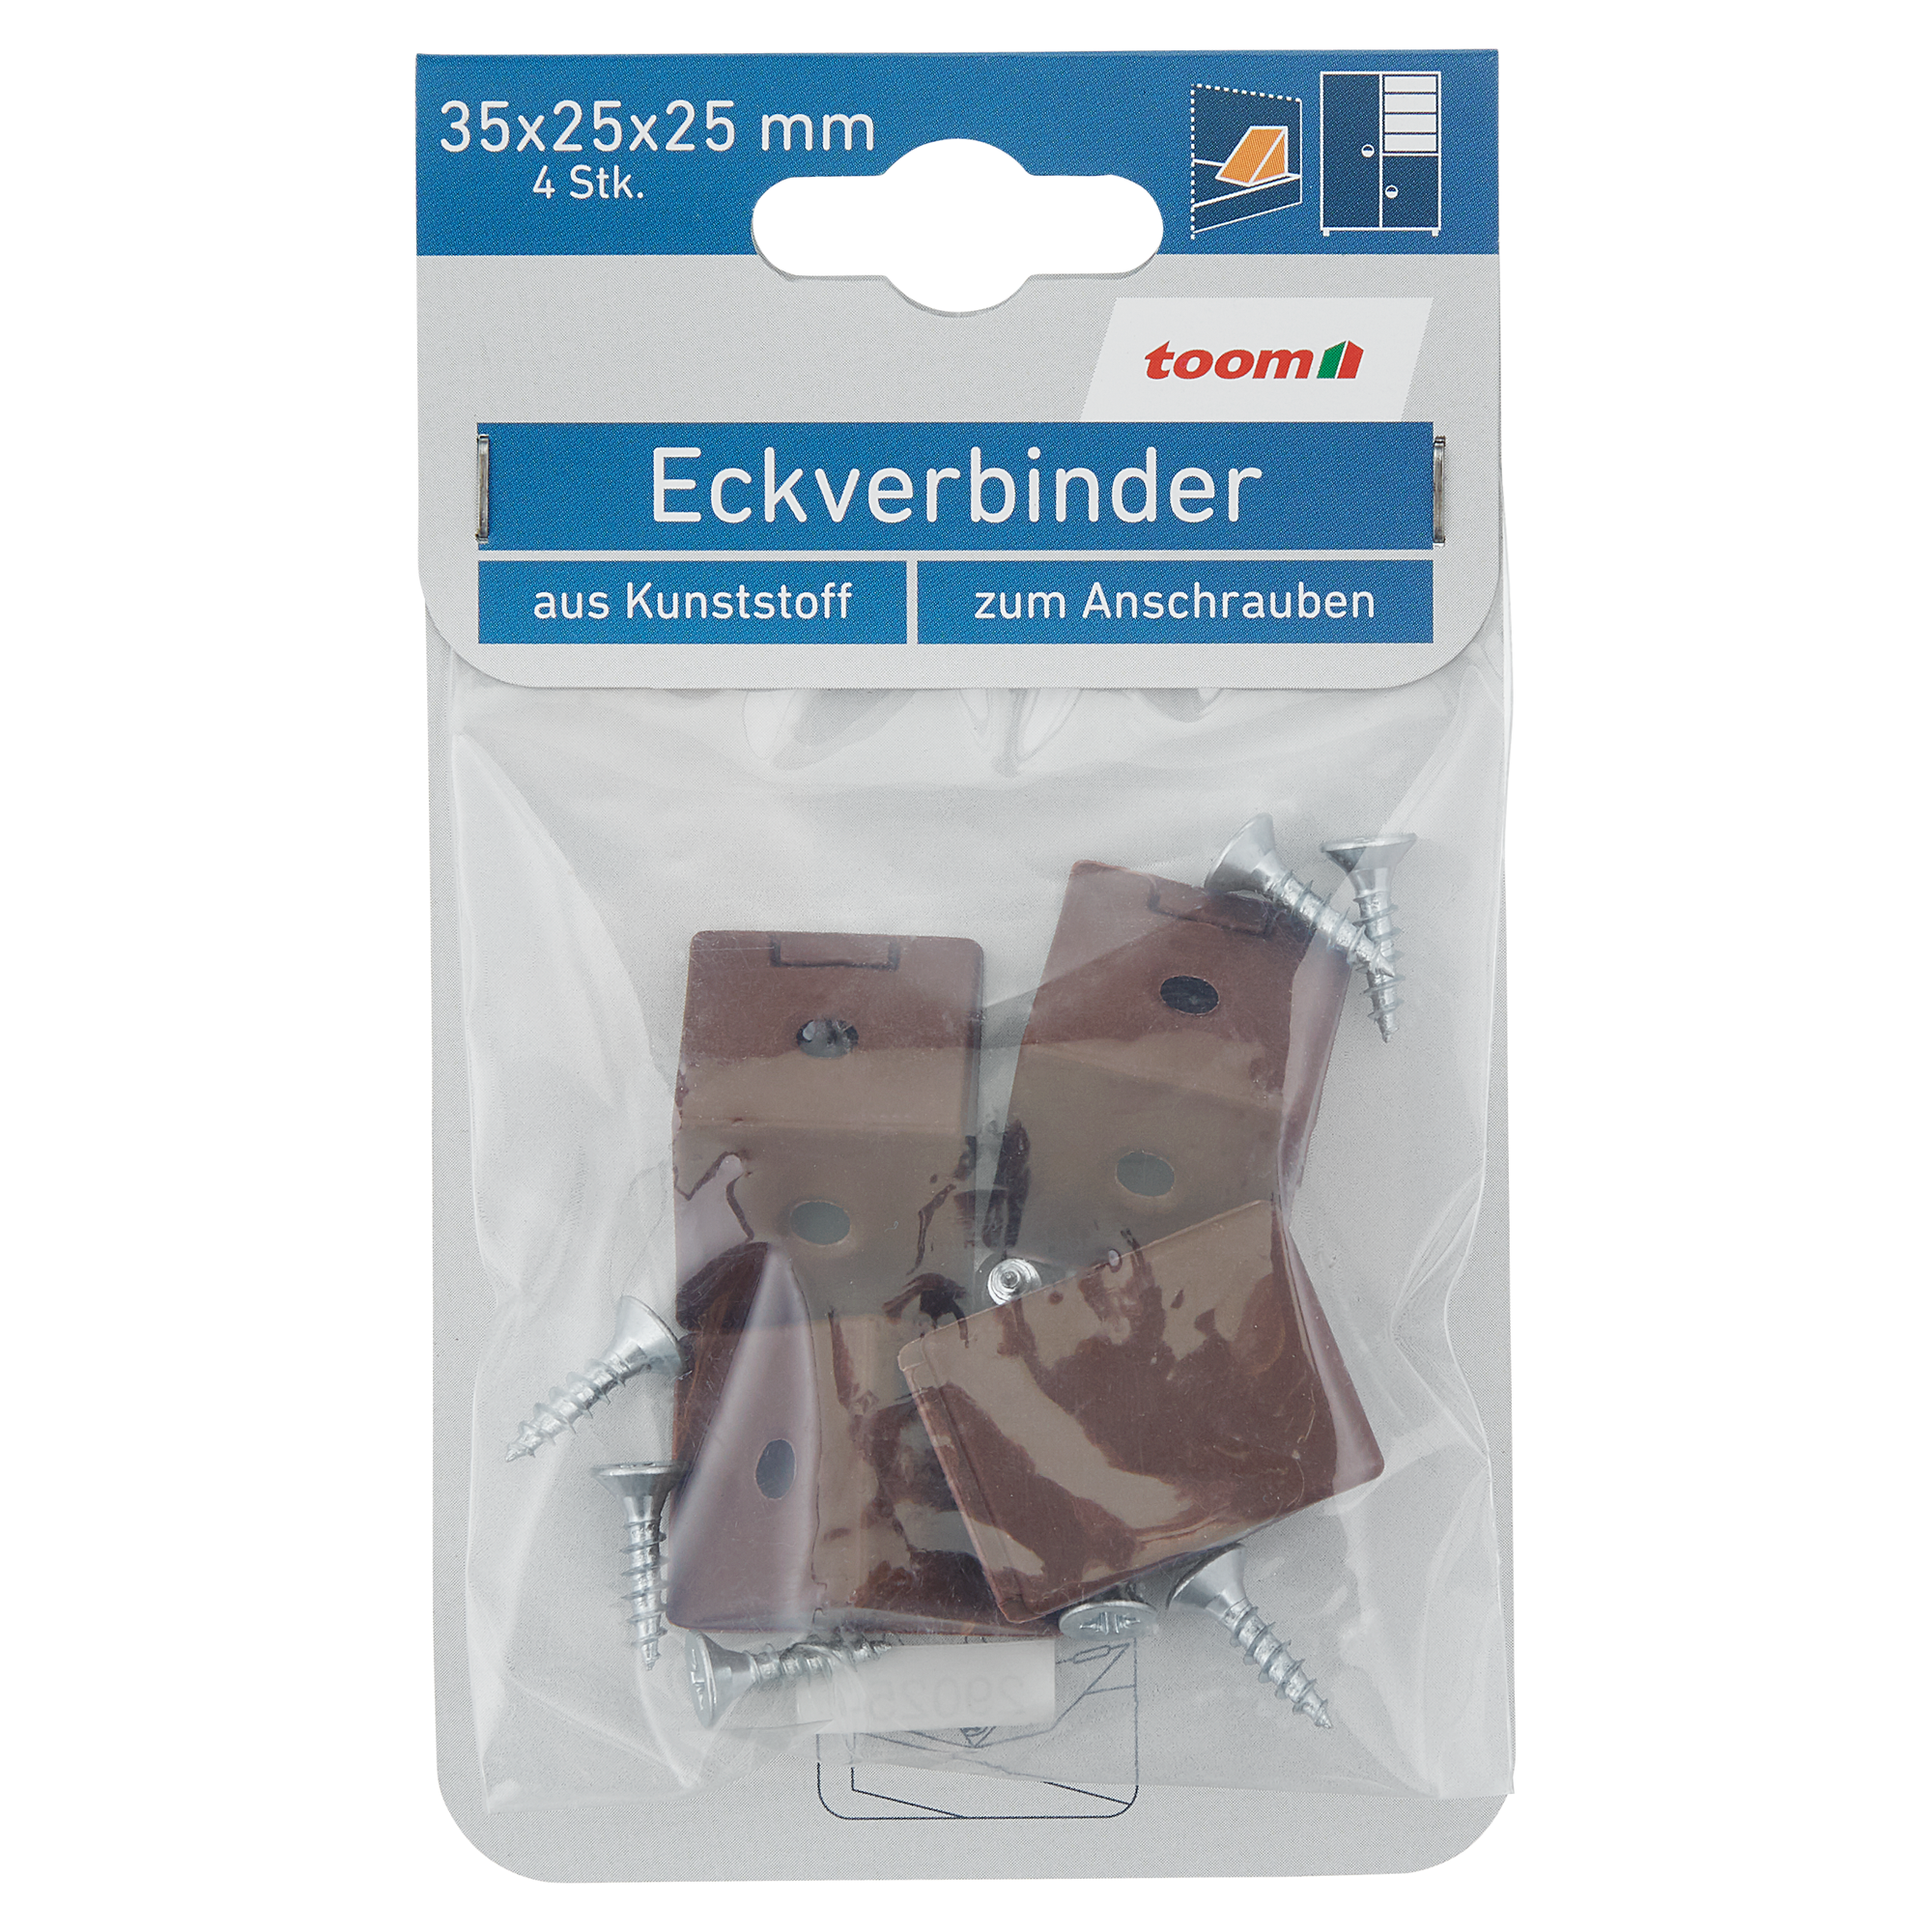 Eckverbinder Kunststoff braun 35 x 25 x 25 mm, 4 Stück + product picture